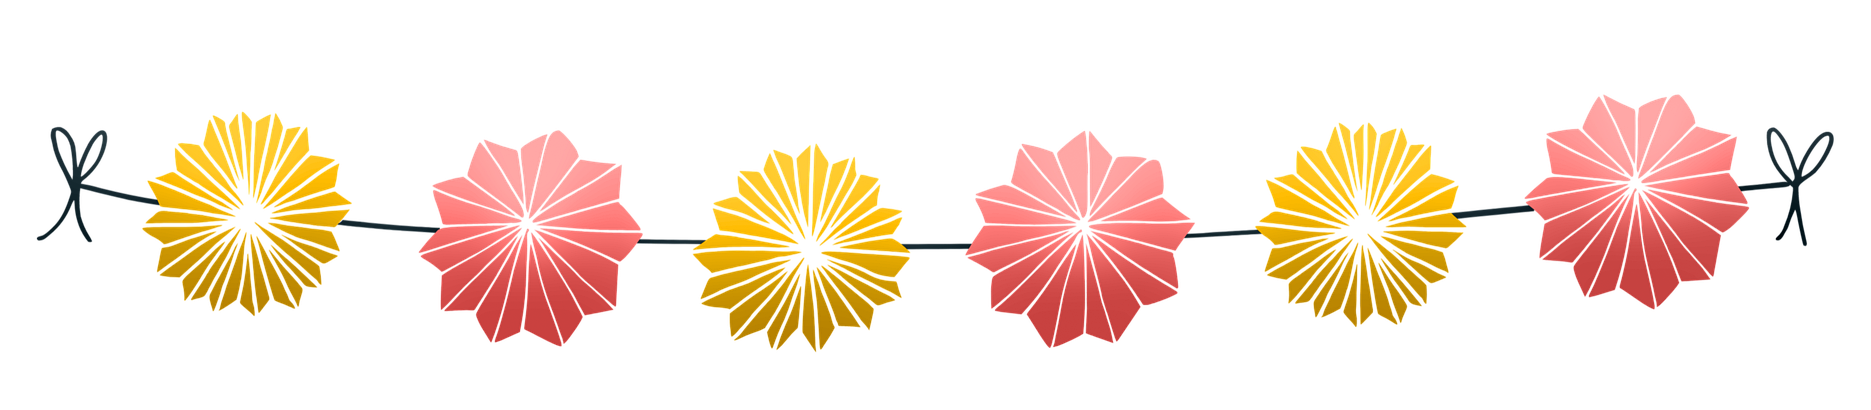 image of paper flower garland